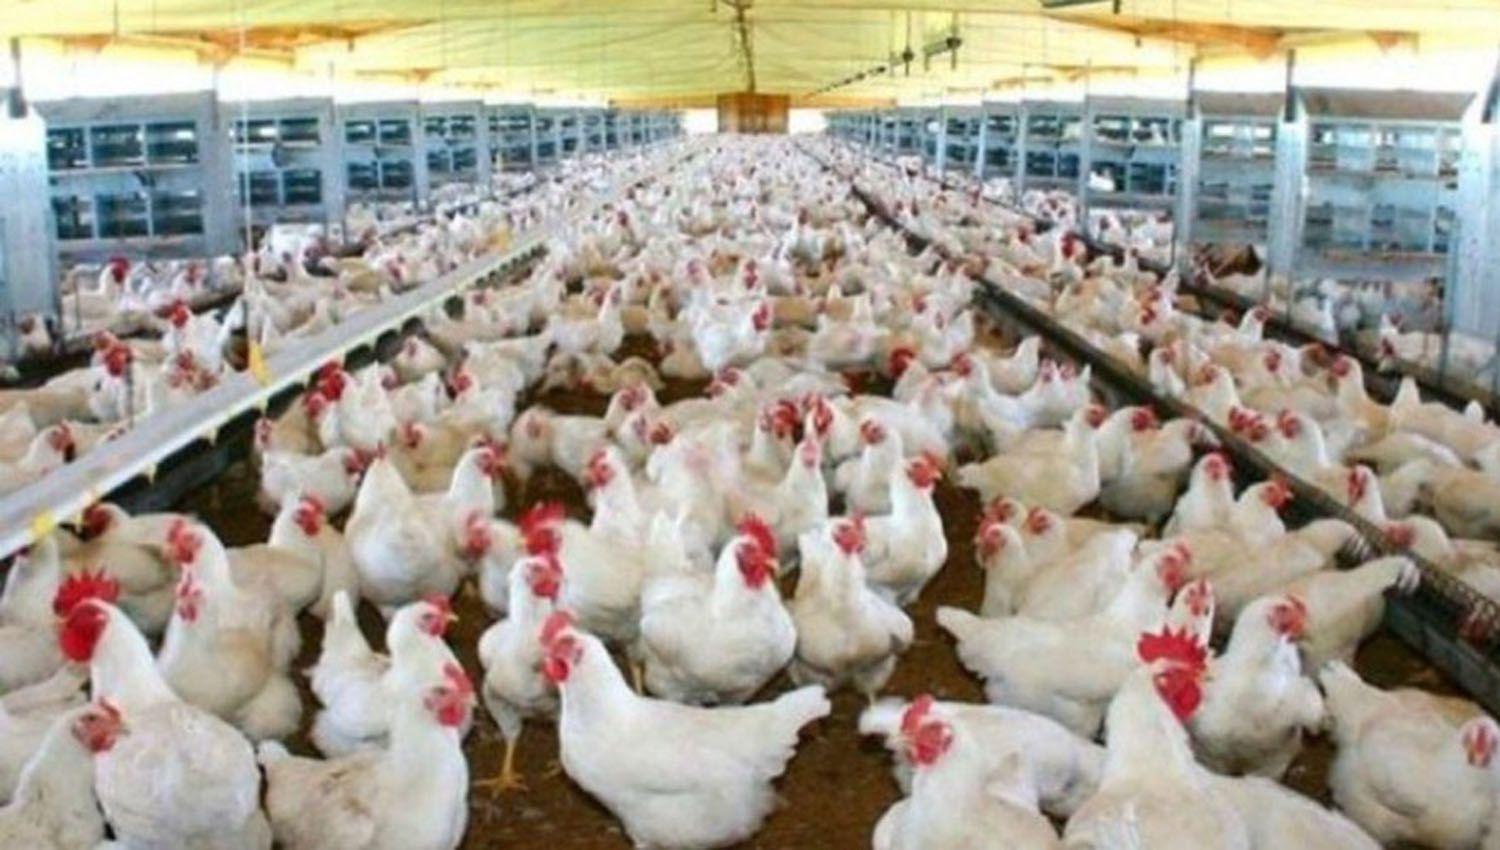 Sacrificaraacuten gallinas por el primer caso de gripe aviar en Santiago